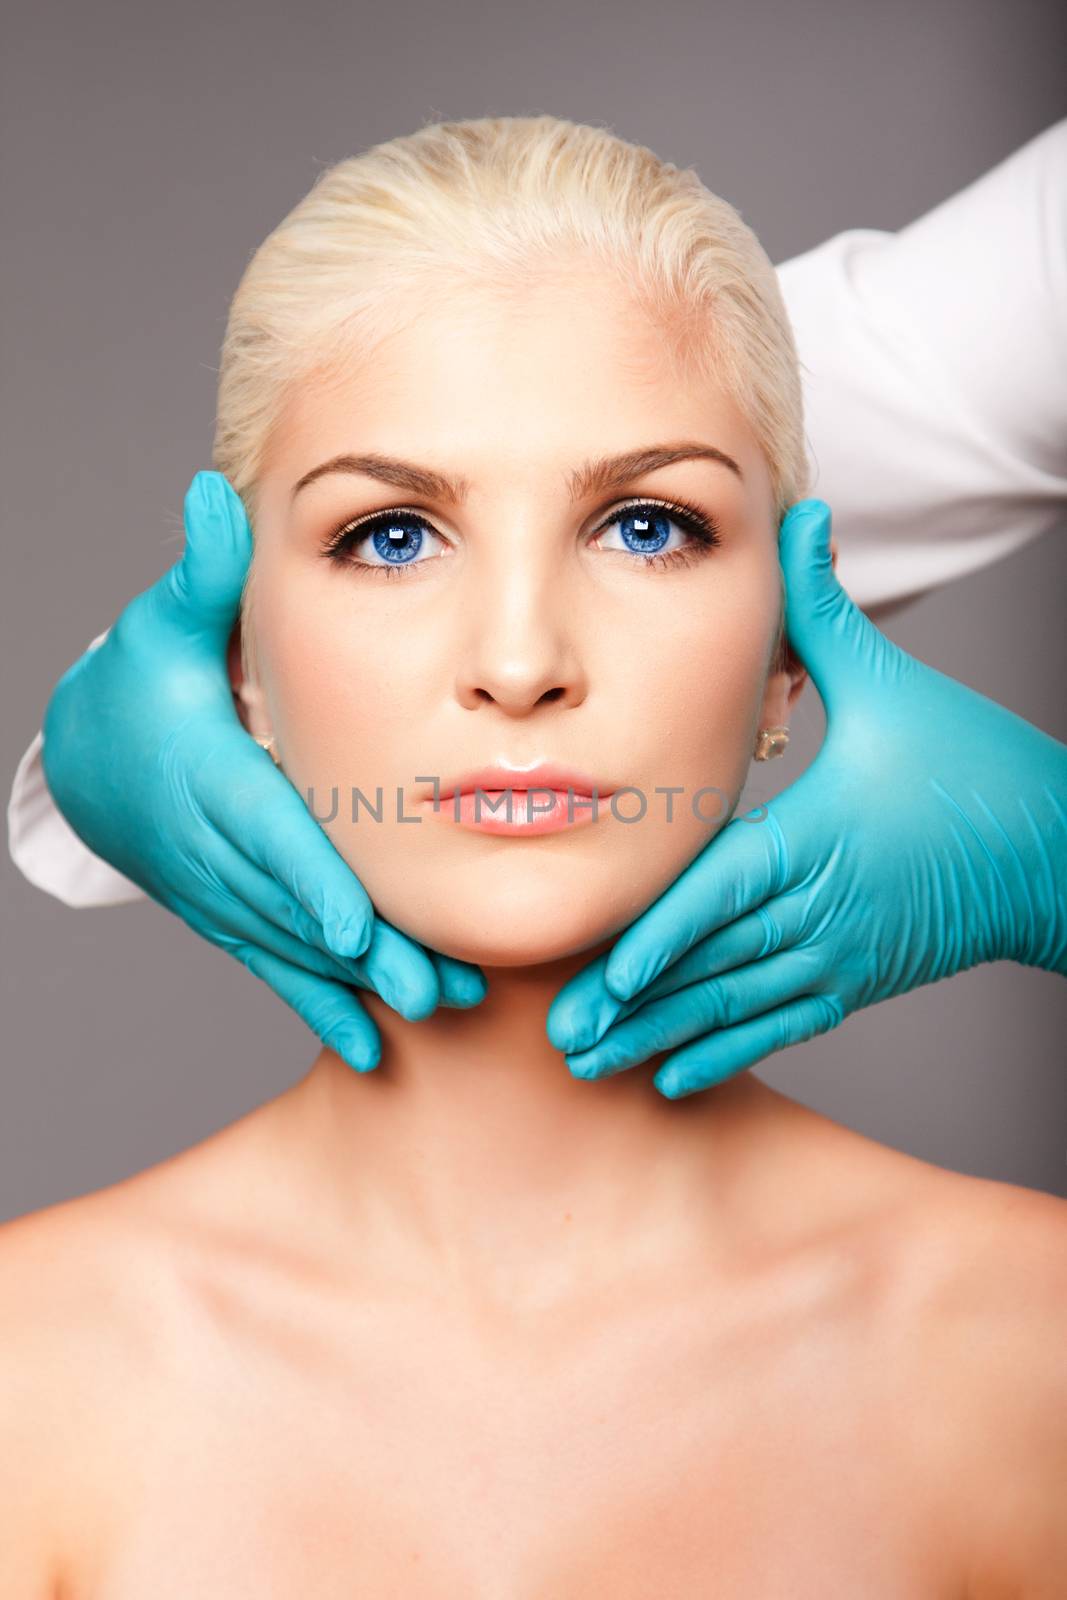 Cosmetic plastic surgeon touching aesthetics face by phakimata